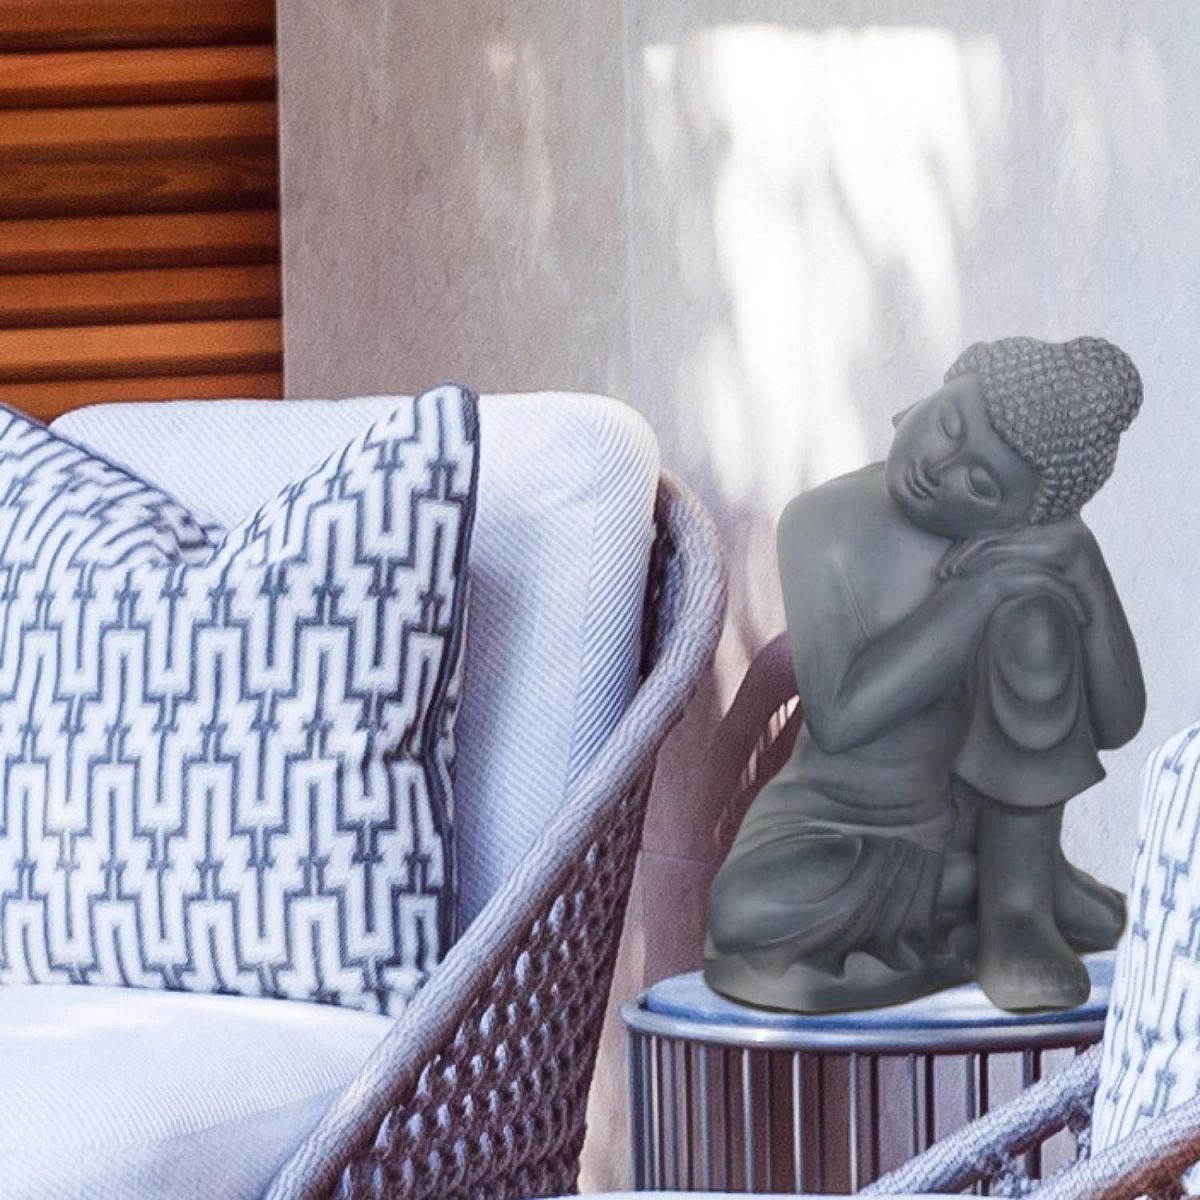 IDEALIST Lite Resting Buddha Grey Indoor and Outdoor Statue L27.5 W24.5 H35.5 cm